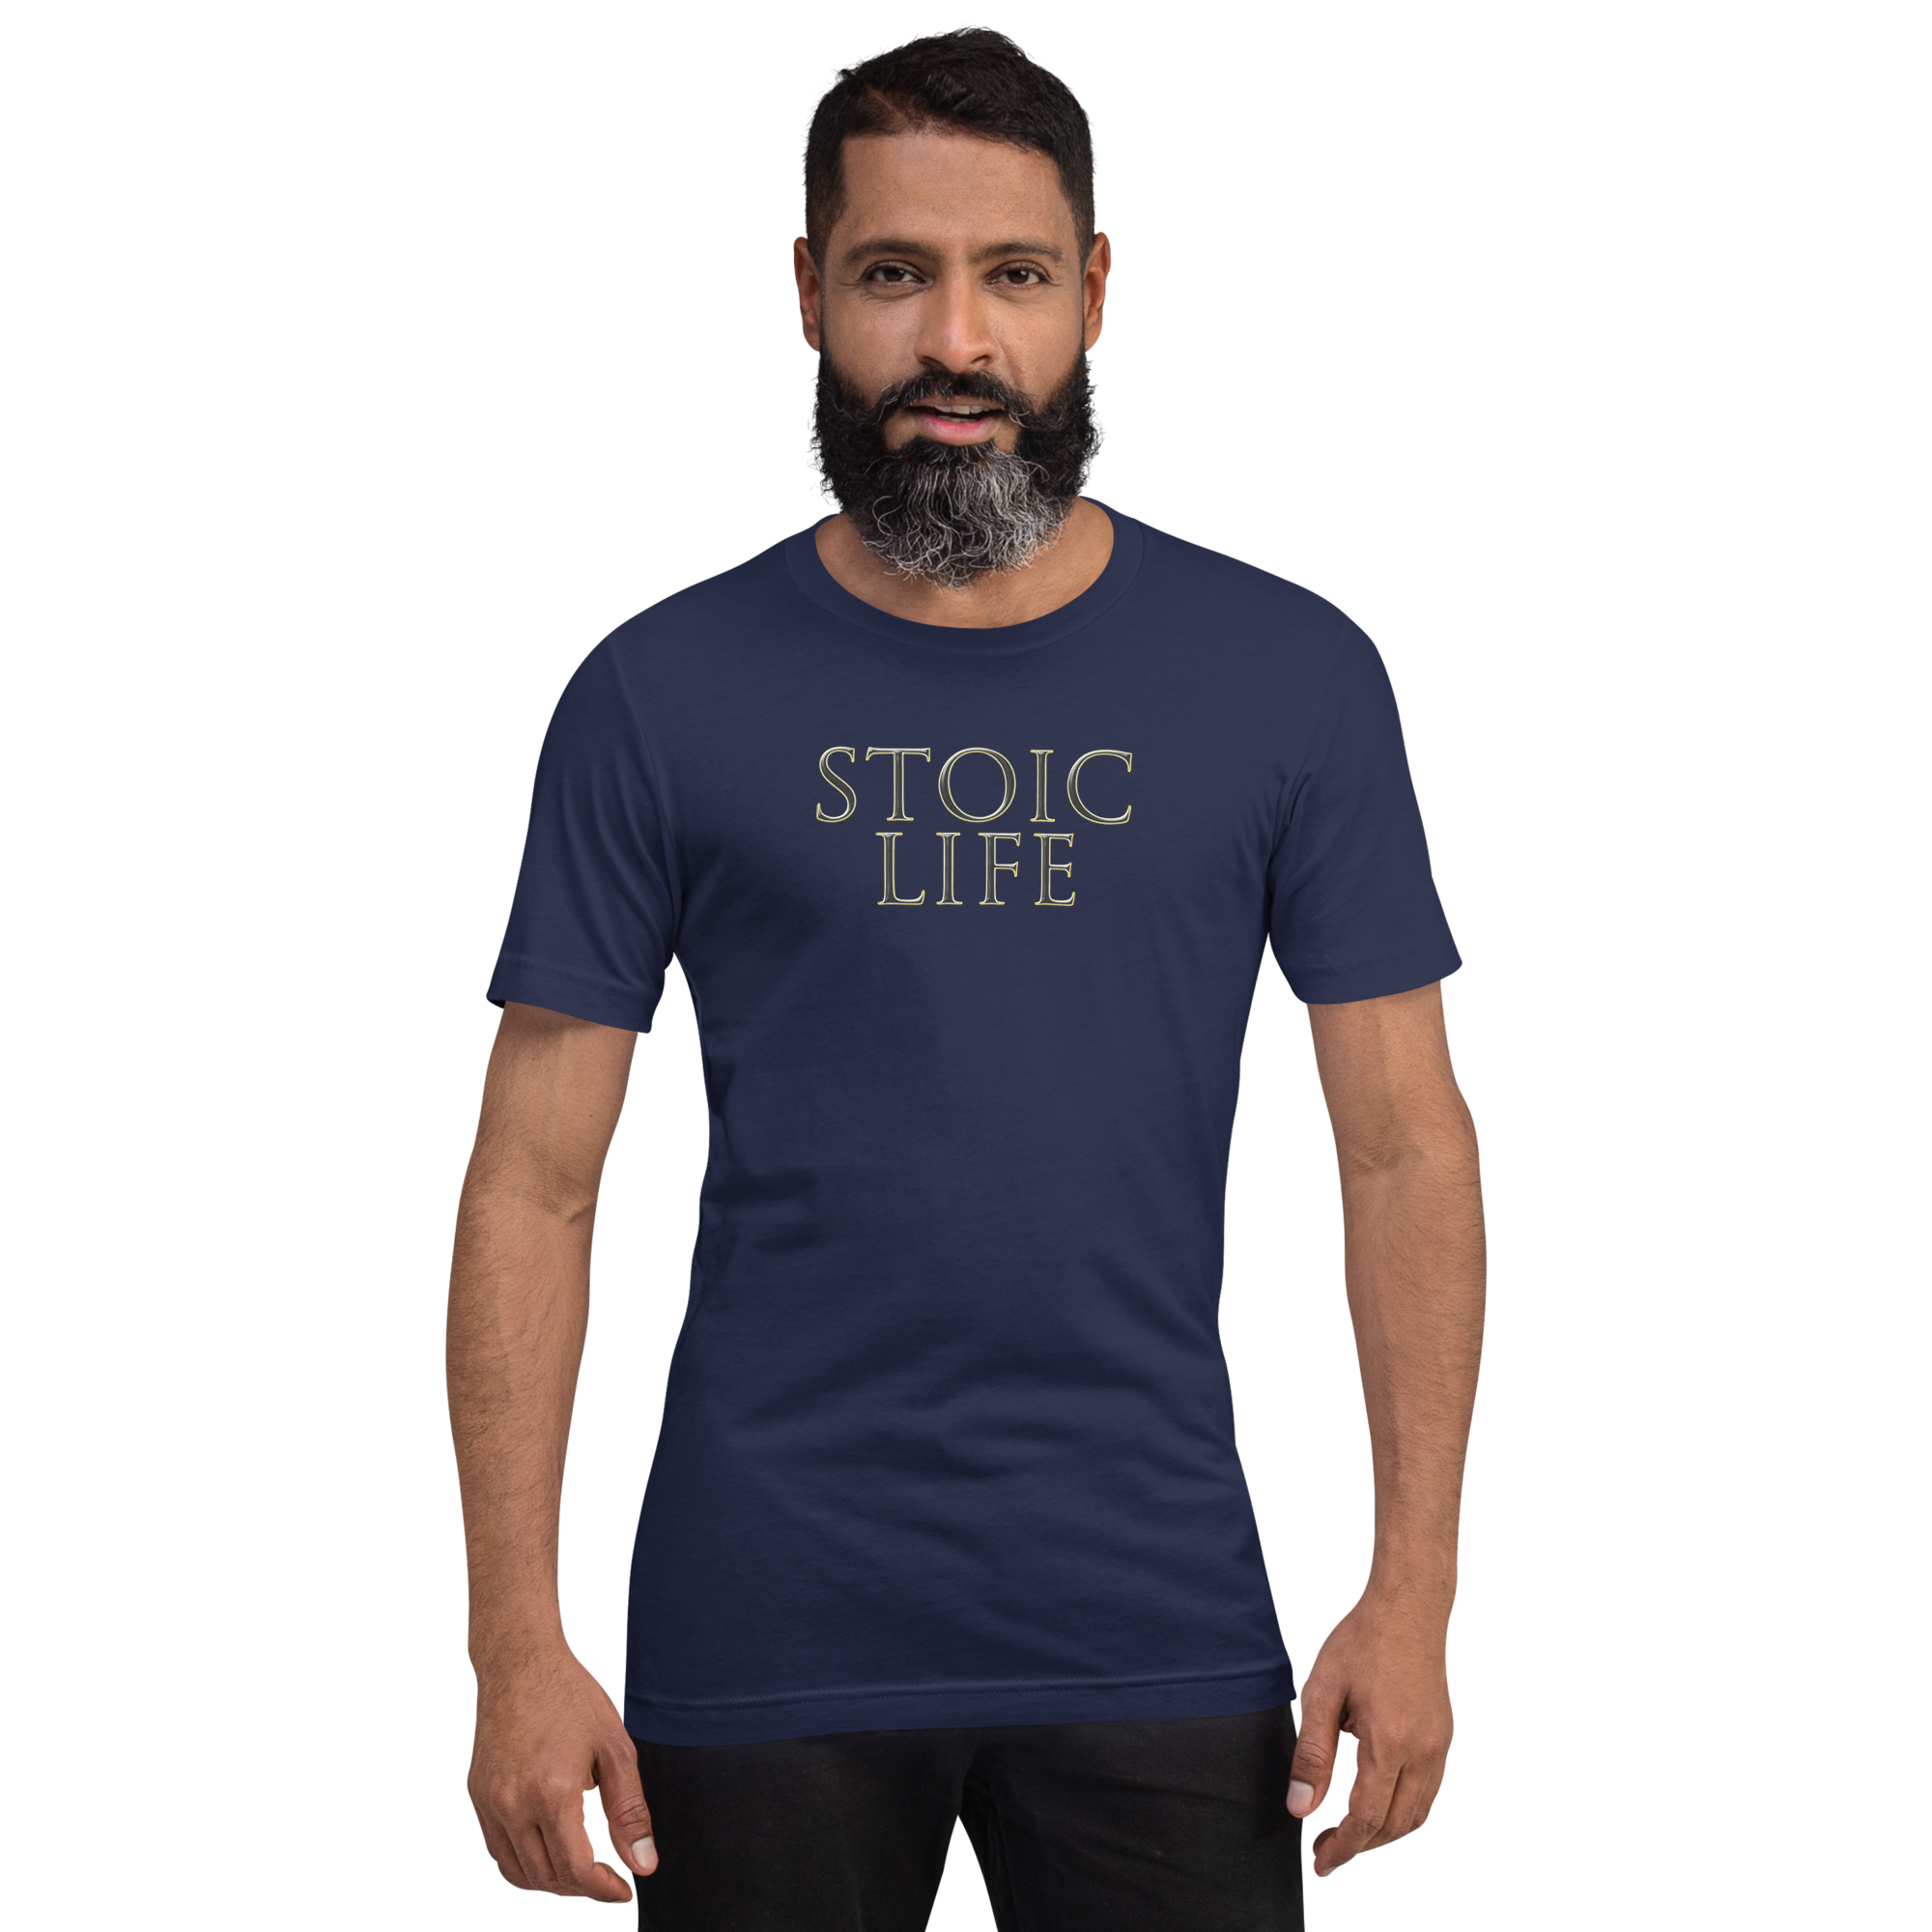 Stoic Life